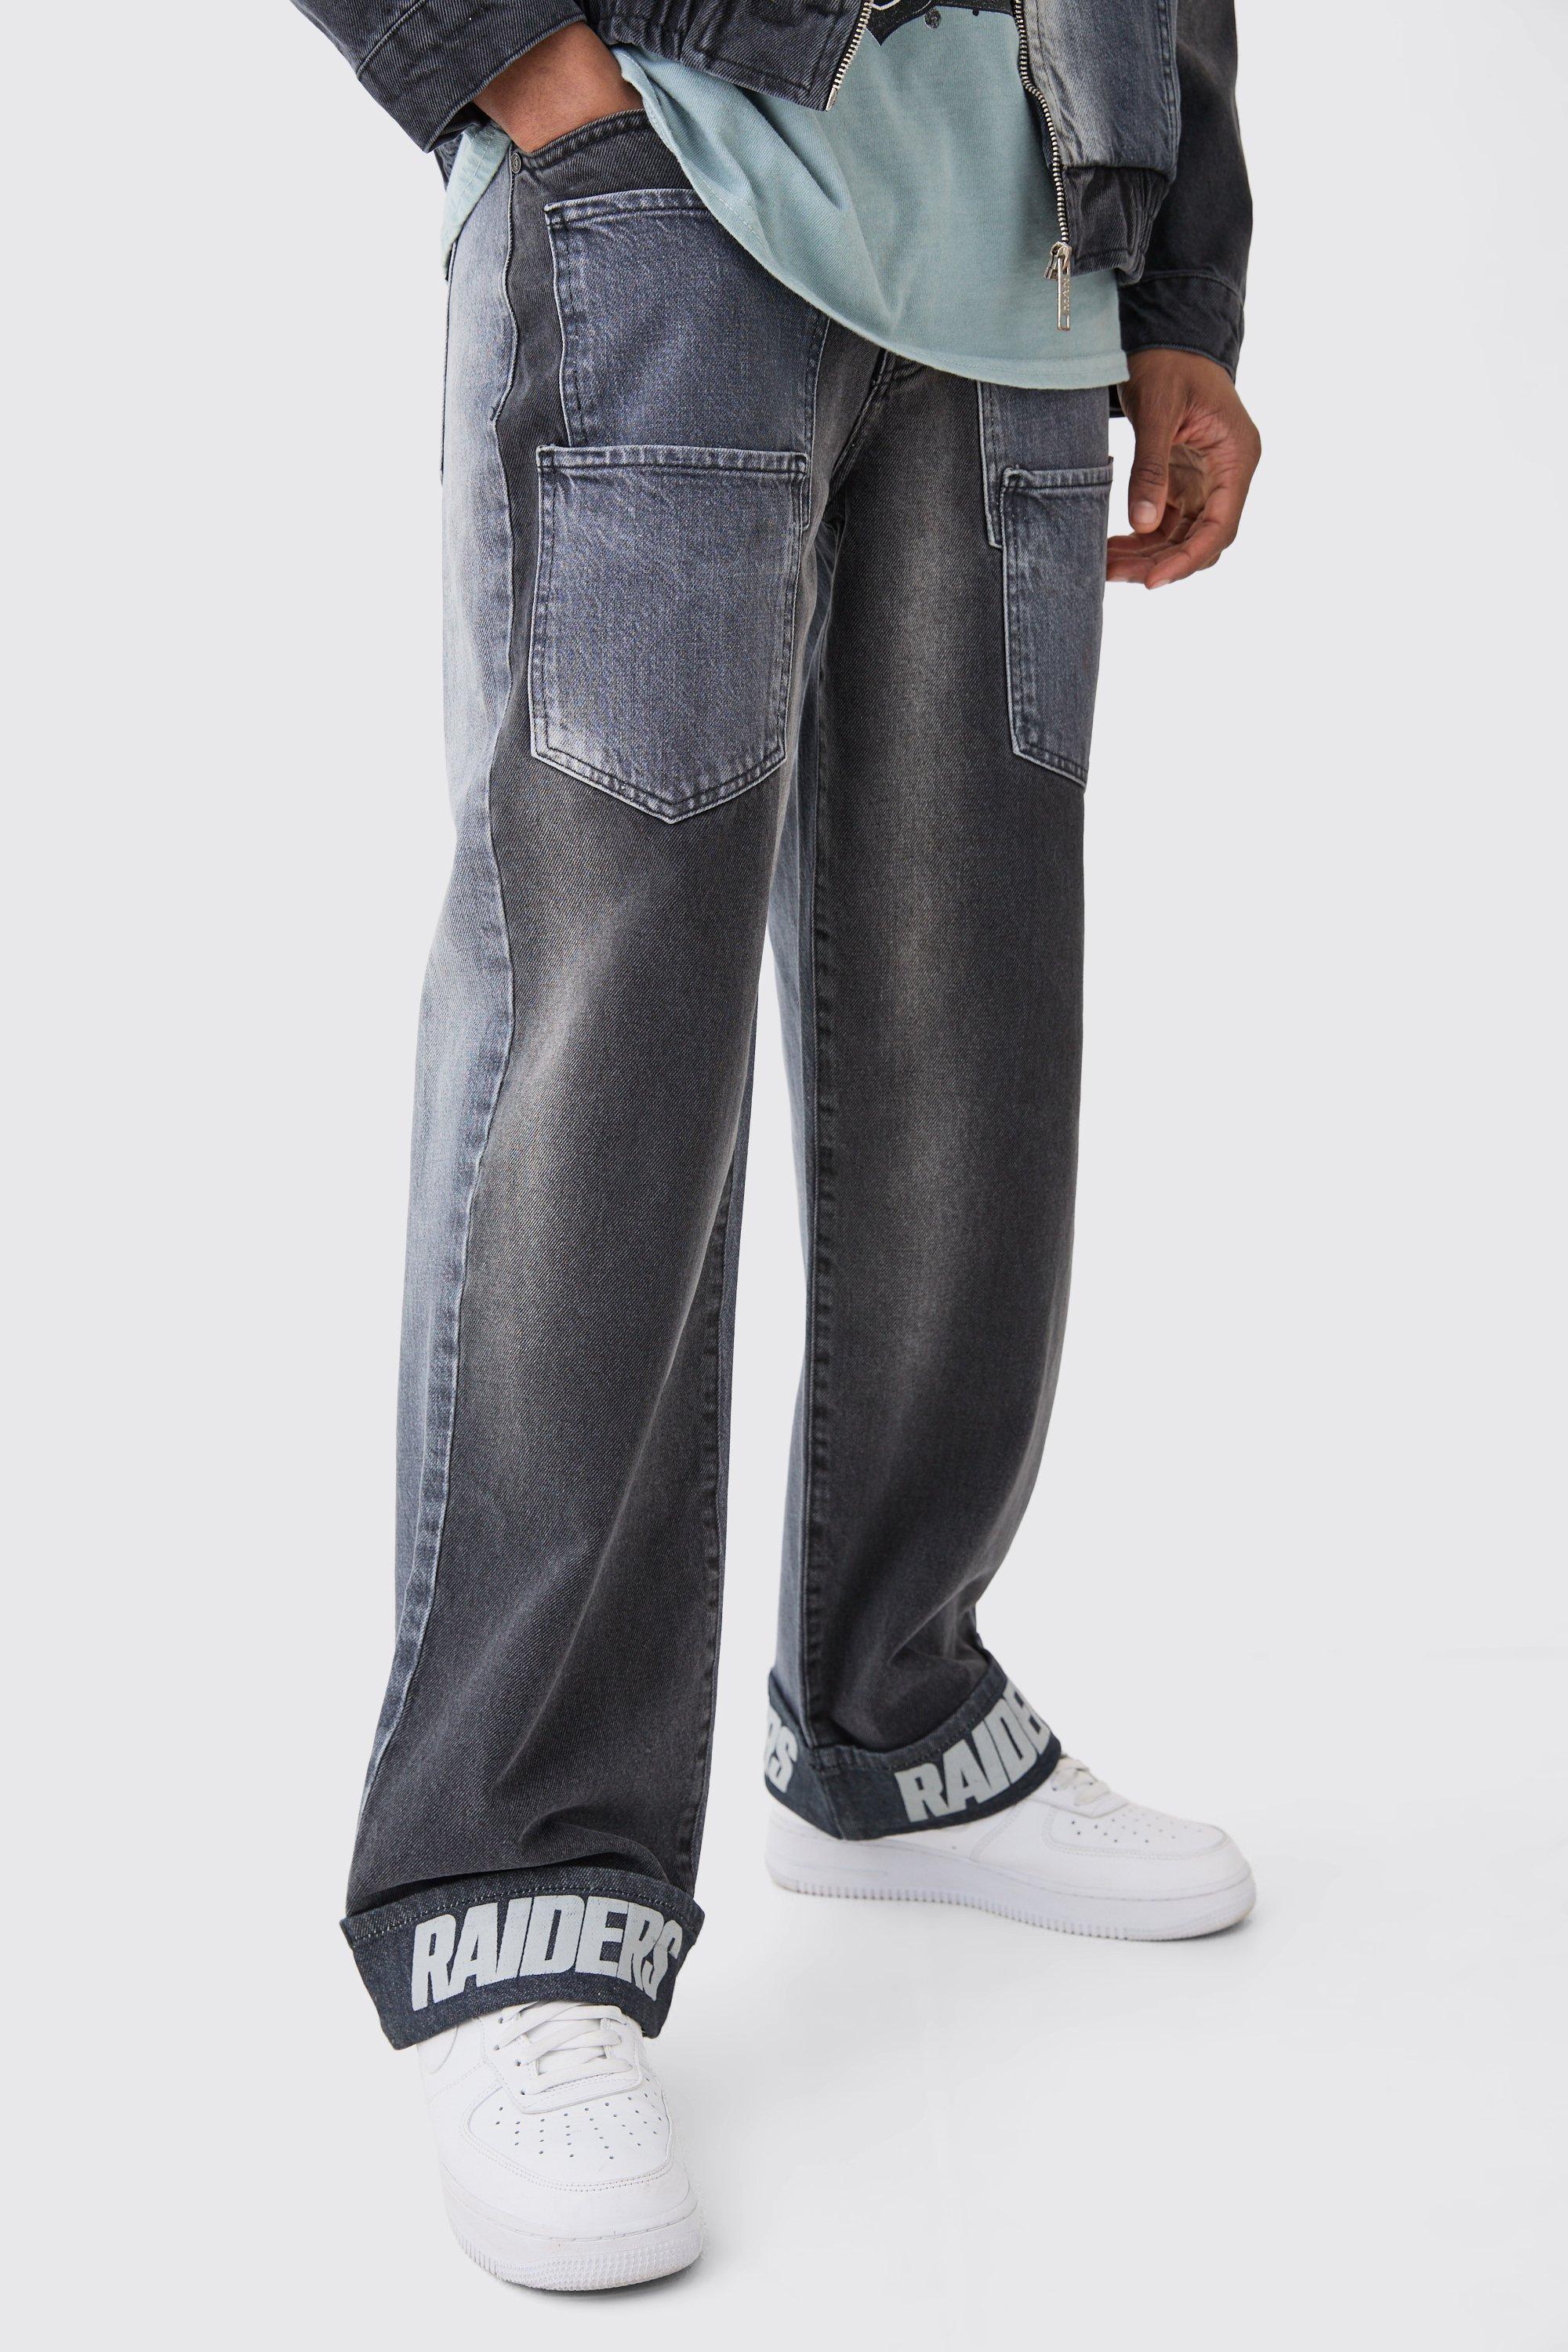 mens grey nfl raiders baggy rigid multi pocket spliced jeans, grey